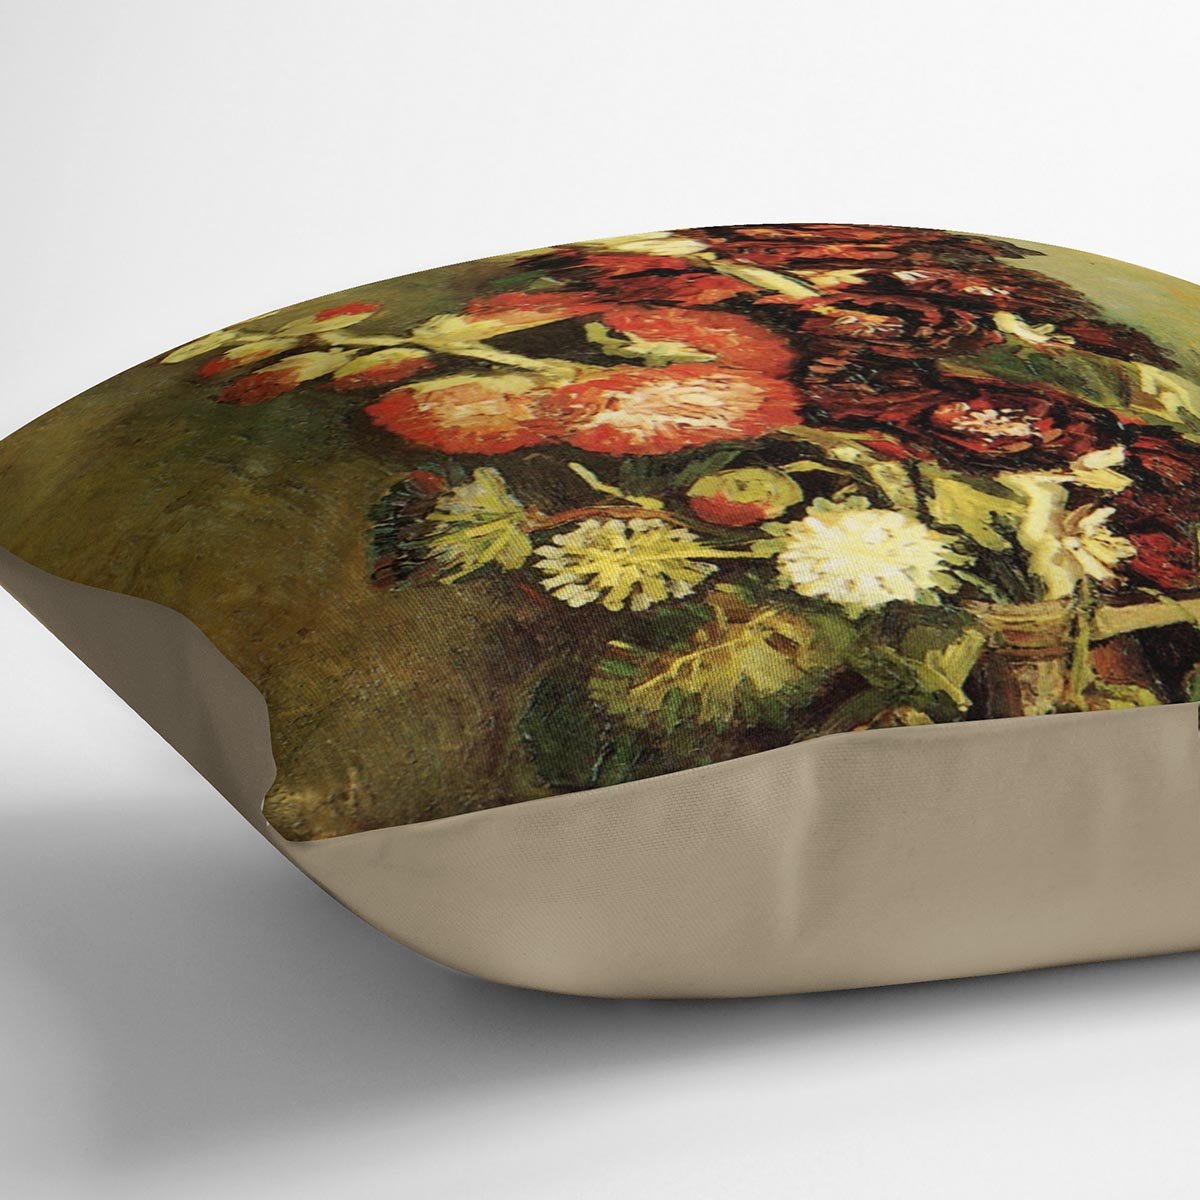 Vase with Hollyhocks by Van Gogh Throw Pillow